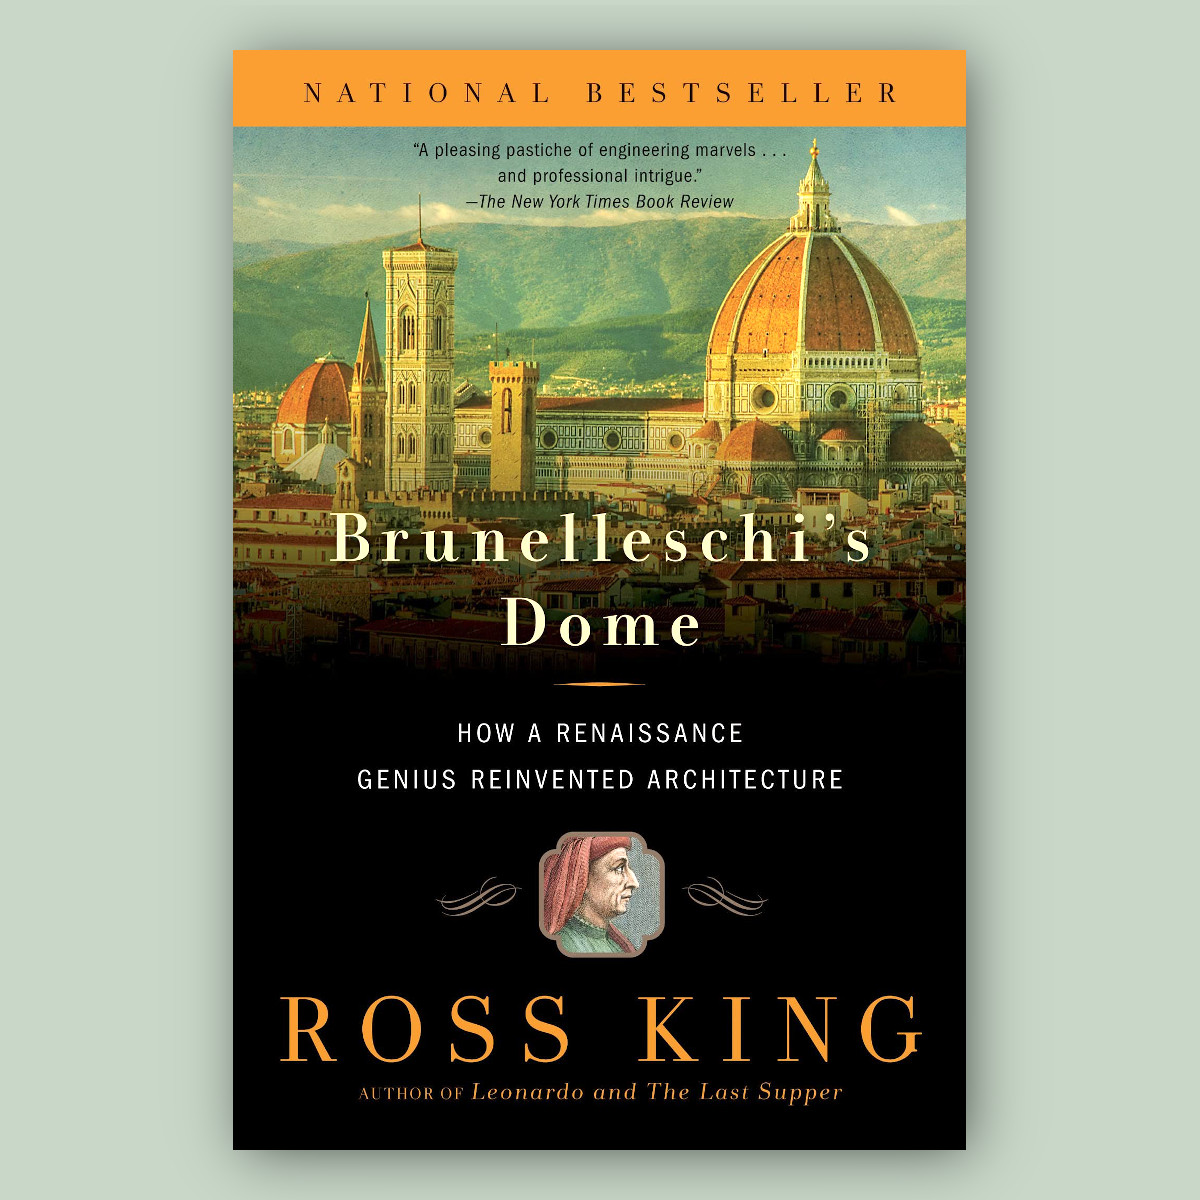 Brunelleschi’s Dome by Ross King